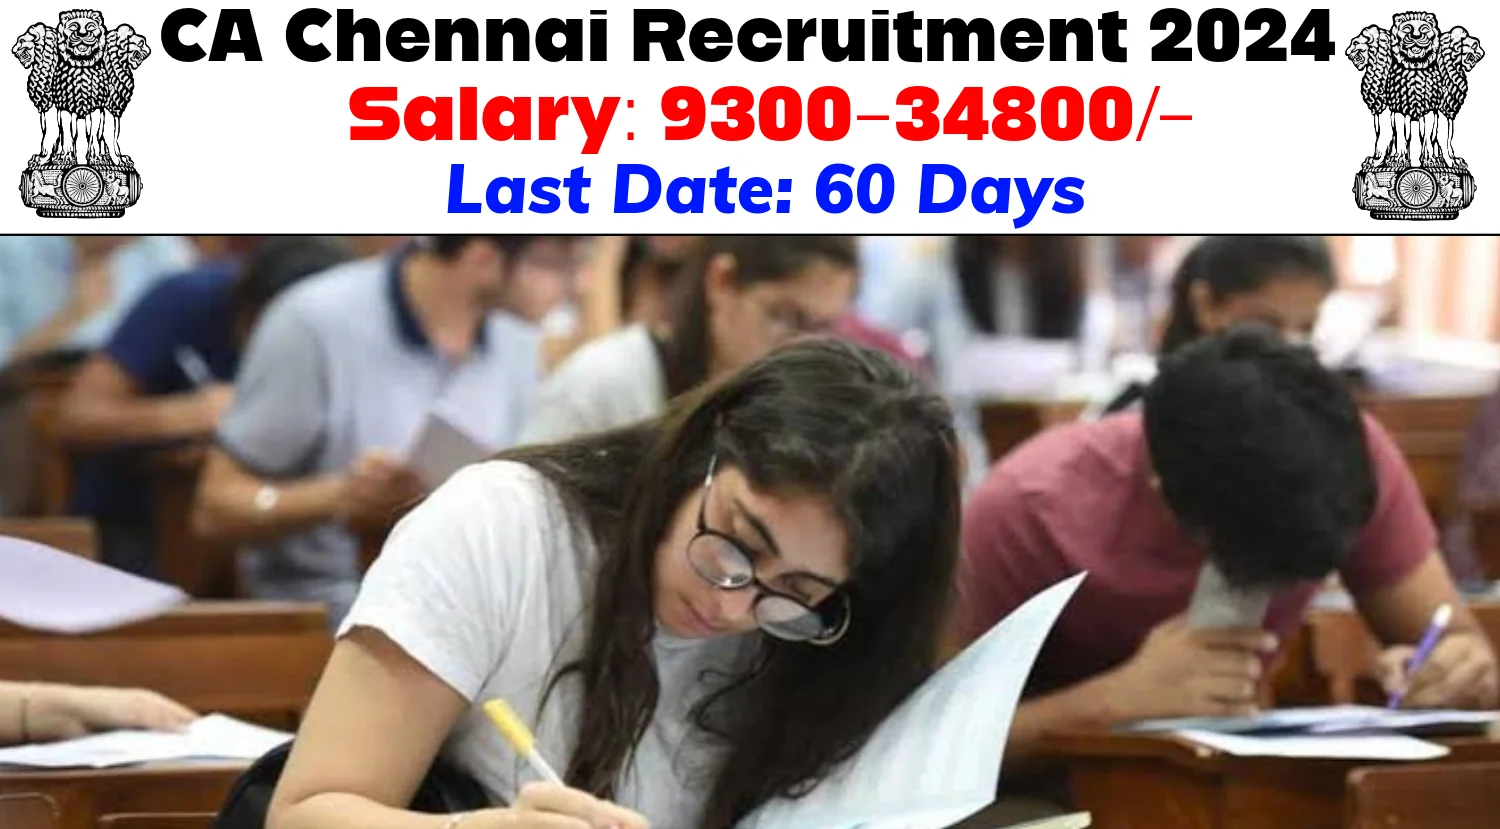 CA Chennai Recruitment 2024